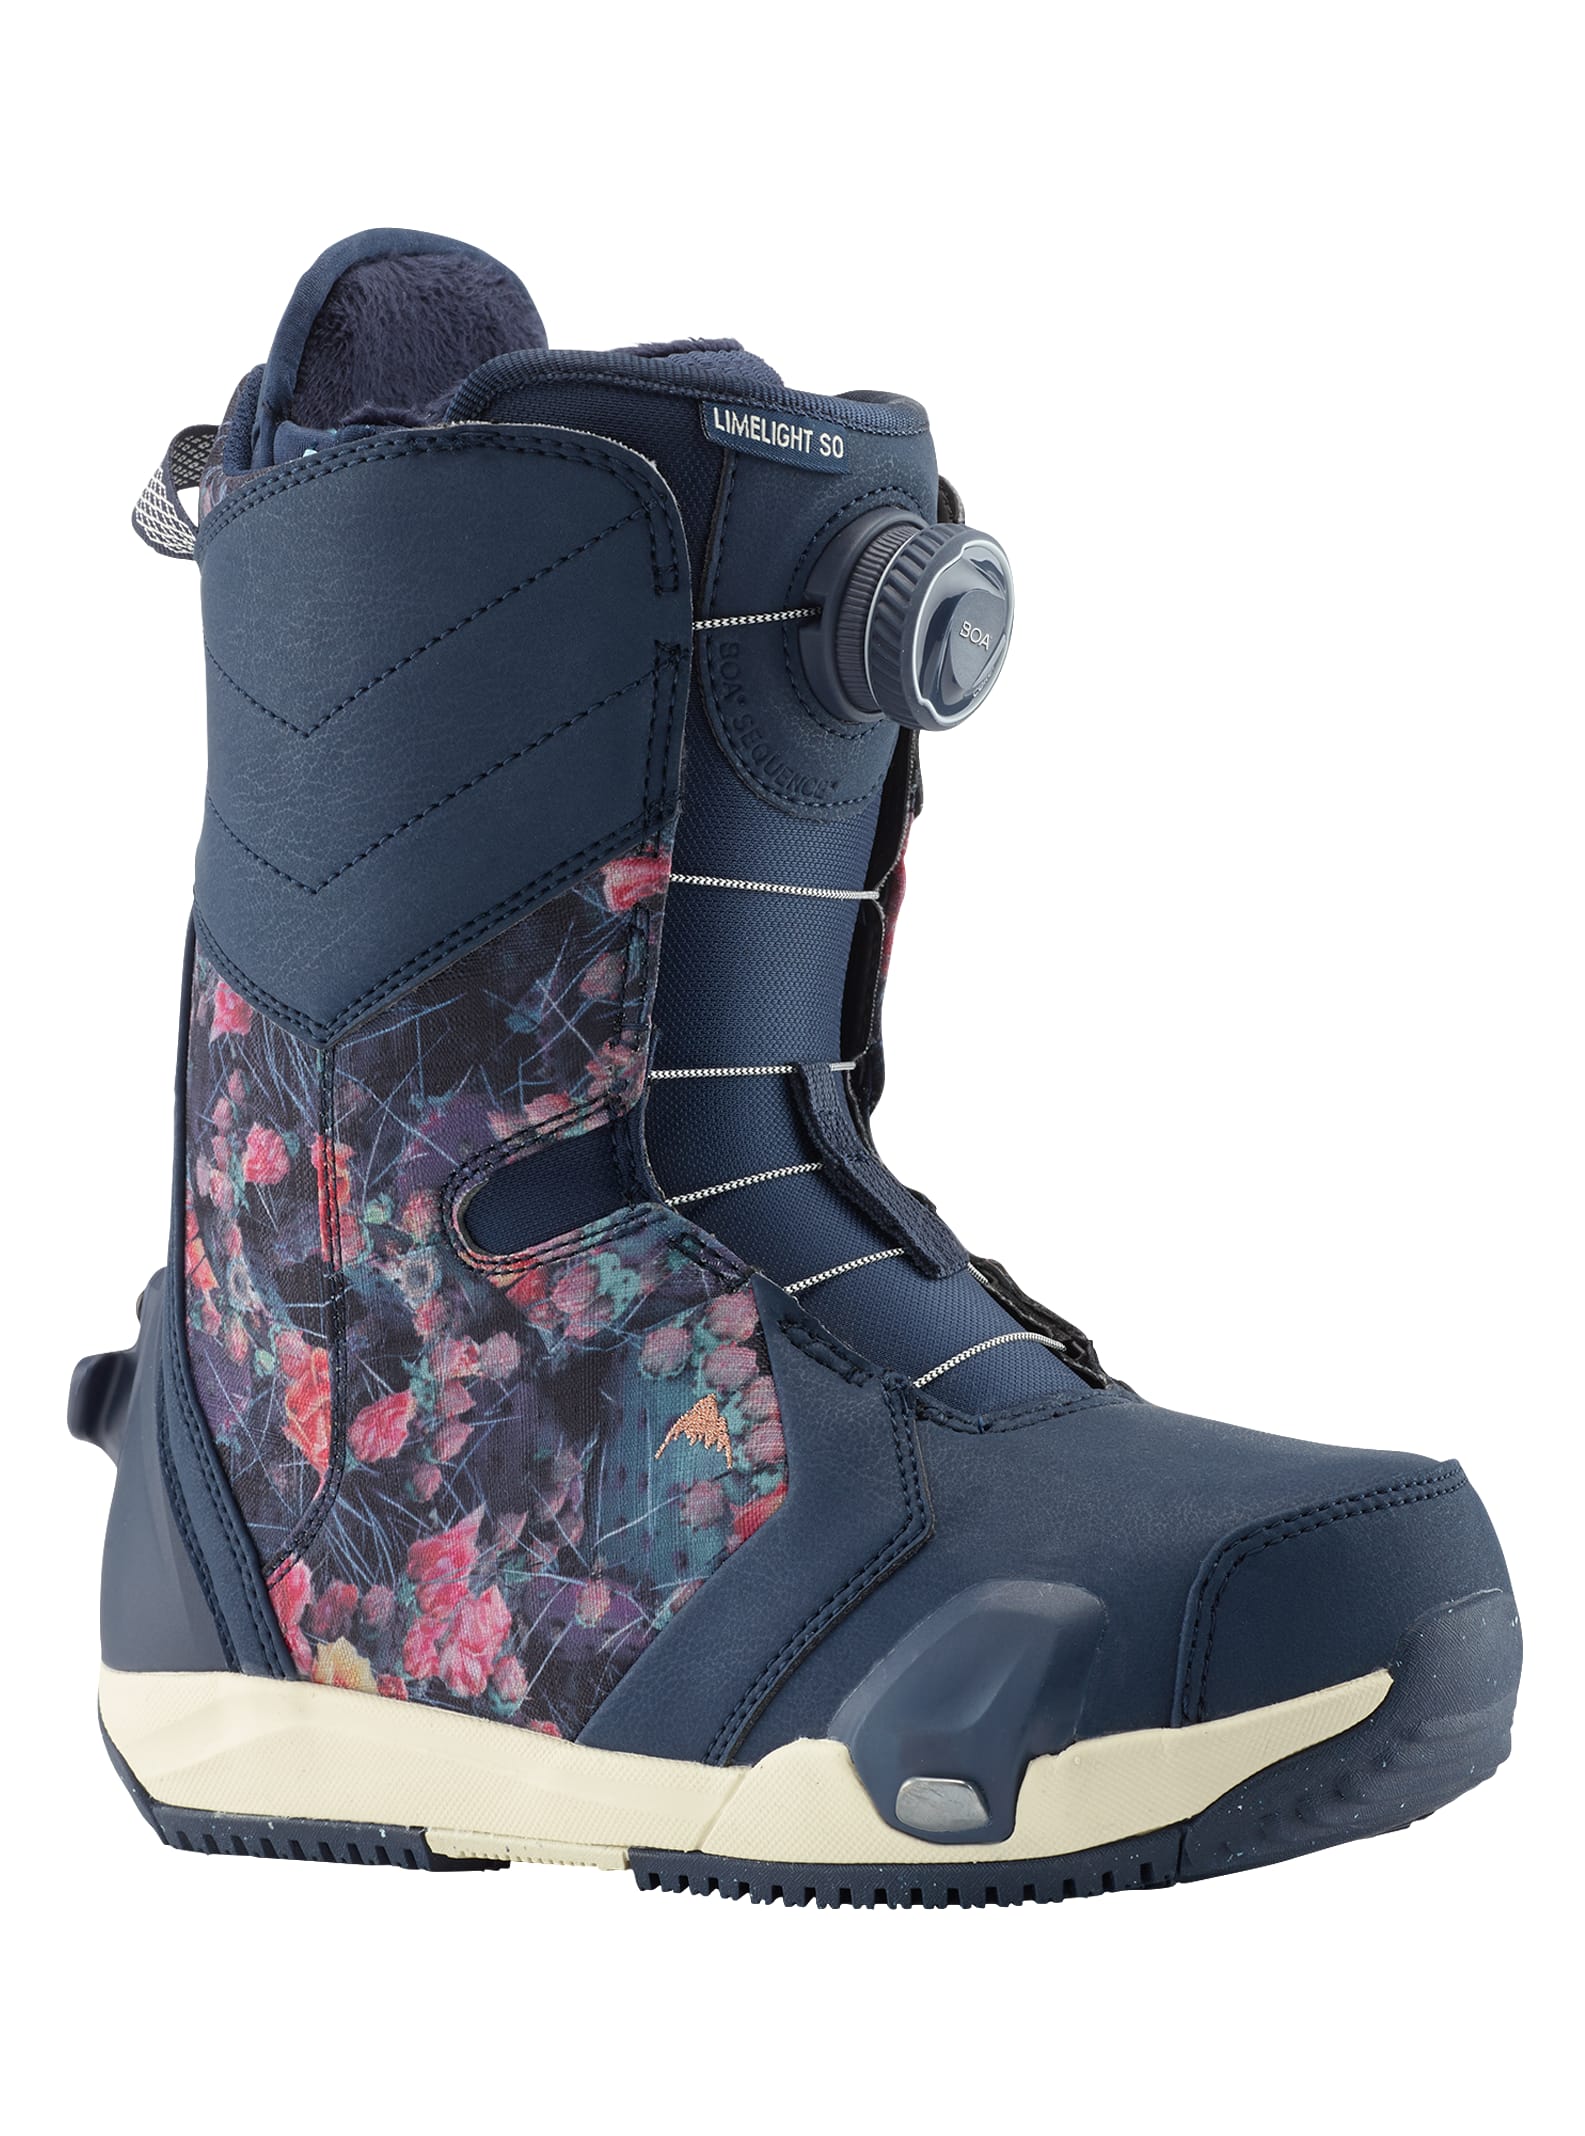 Burton - Boots de snowboard Step On Limelight femme, Midnite Bloom, 5.0